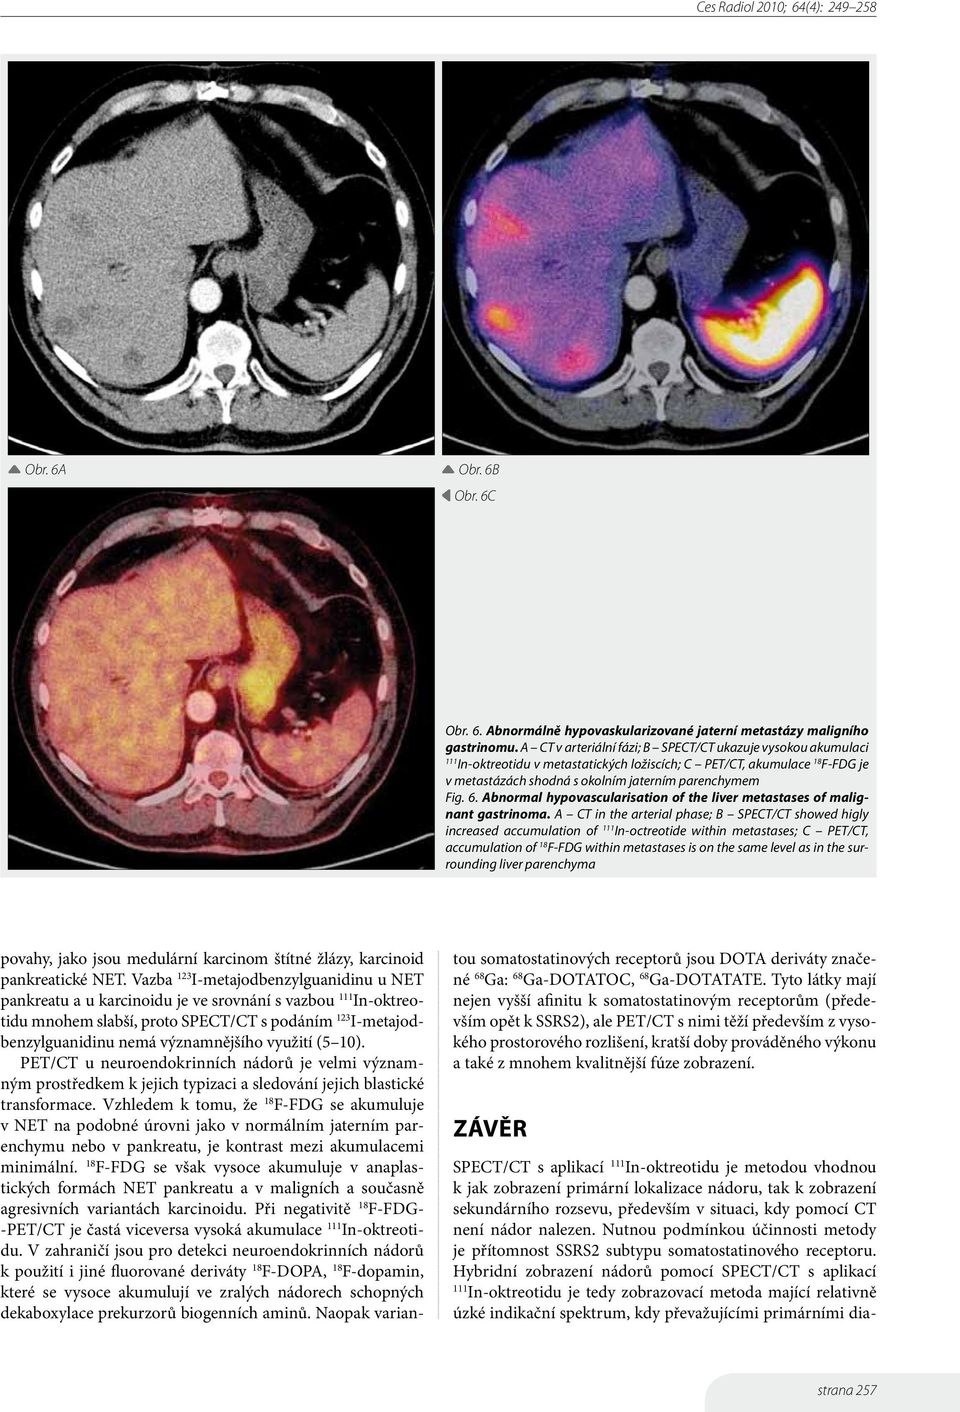 Abnormal hypovascularisation of the liver metastases of malignant gastrinoma.